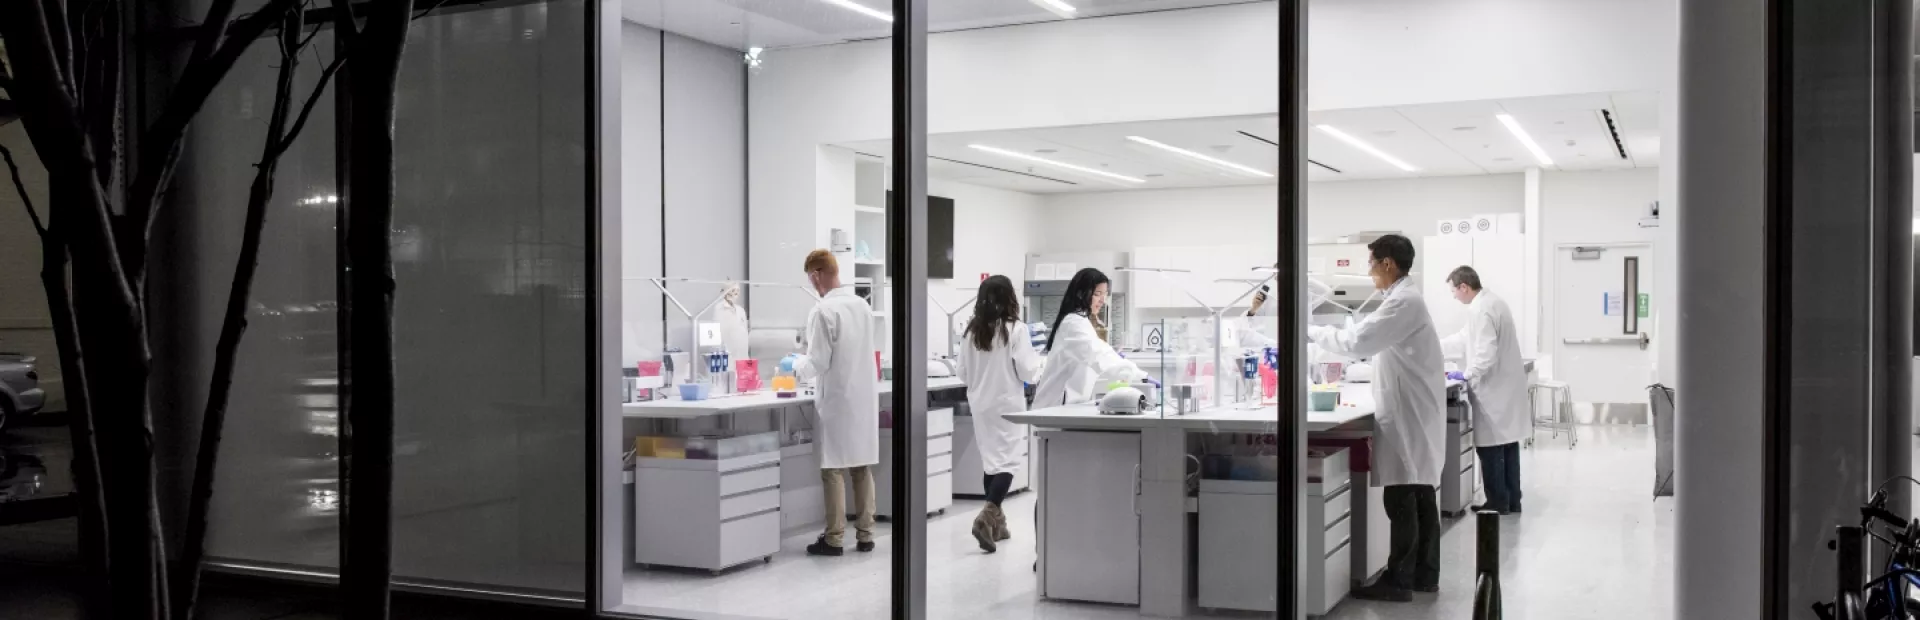 Researchers in a lab